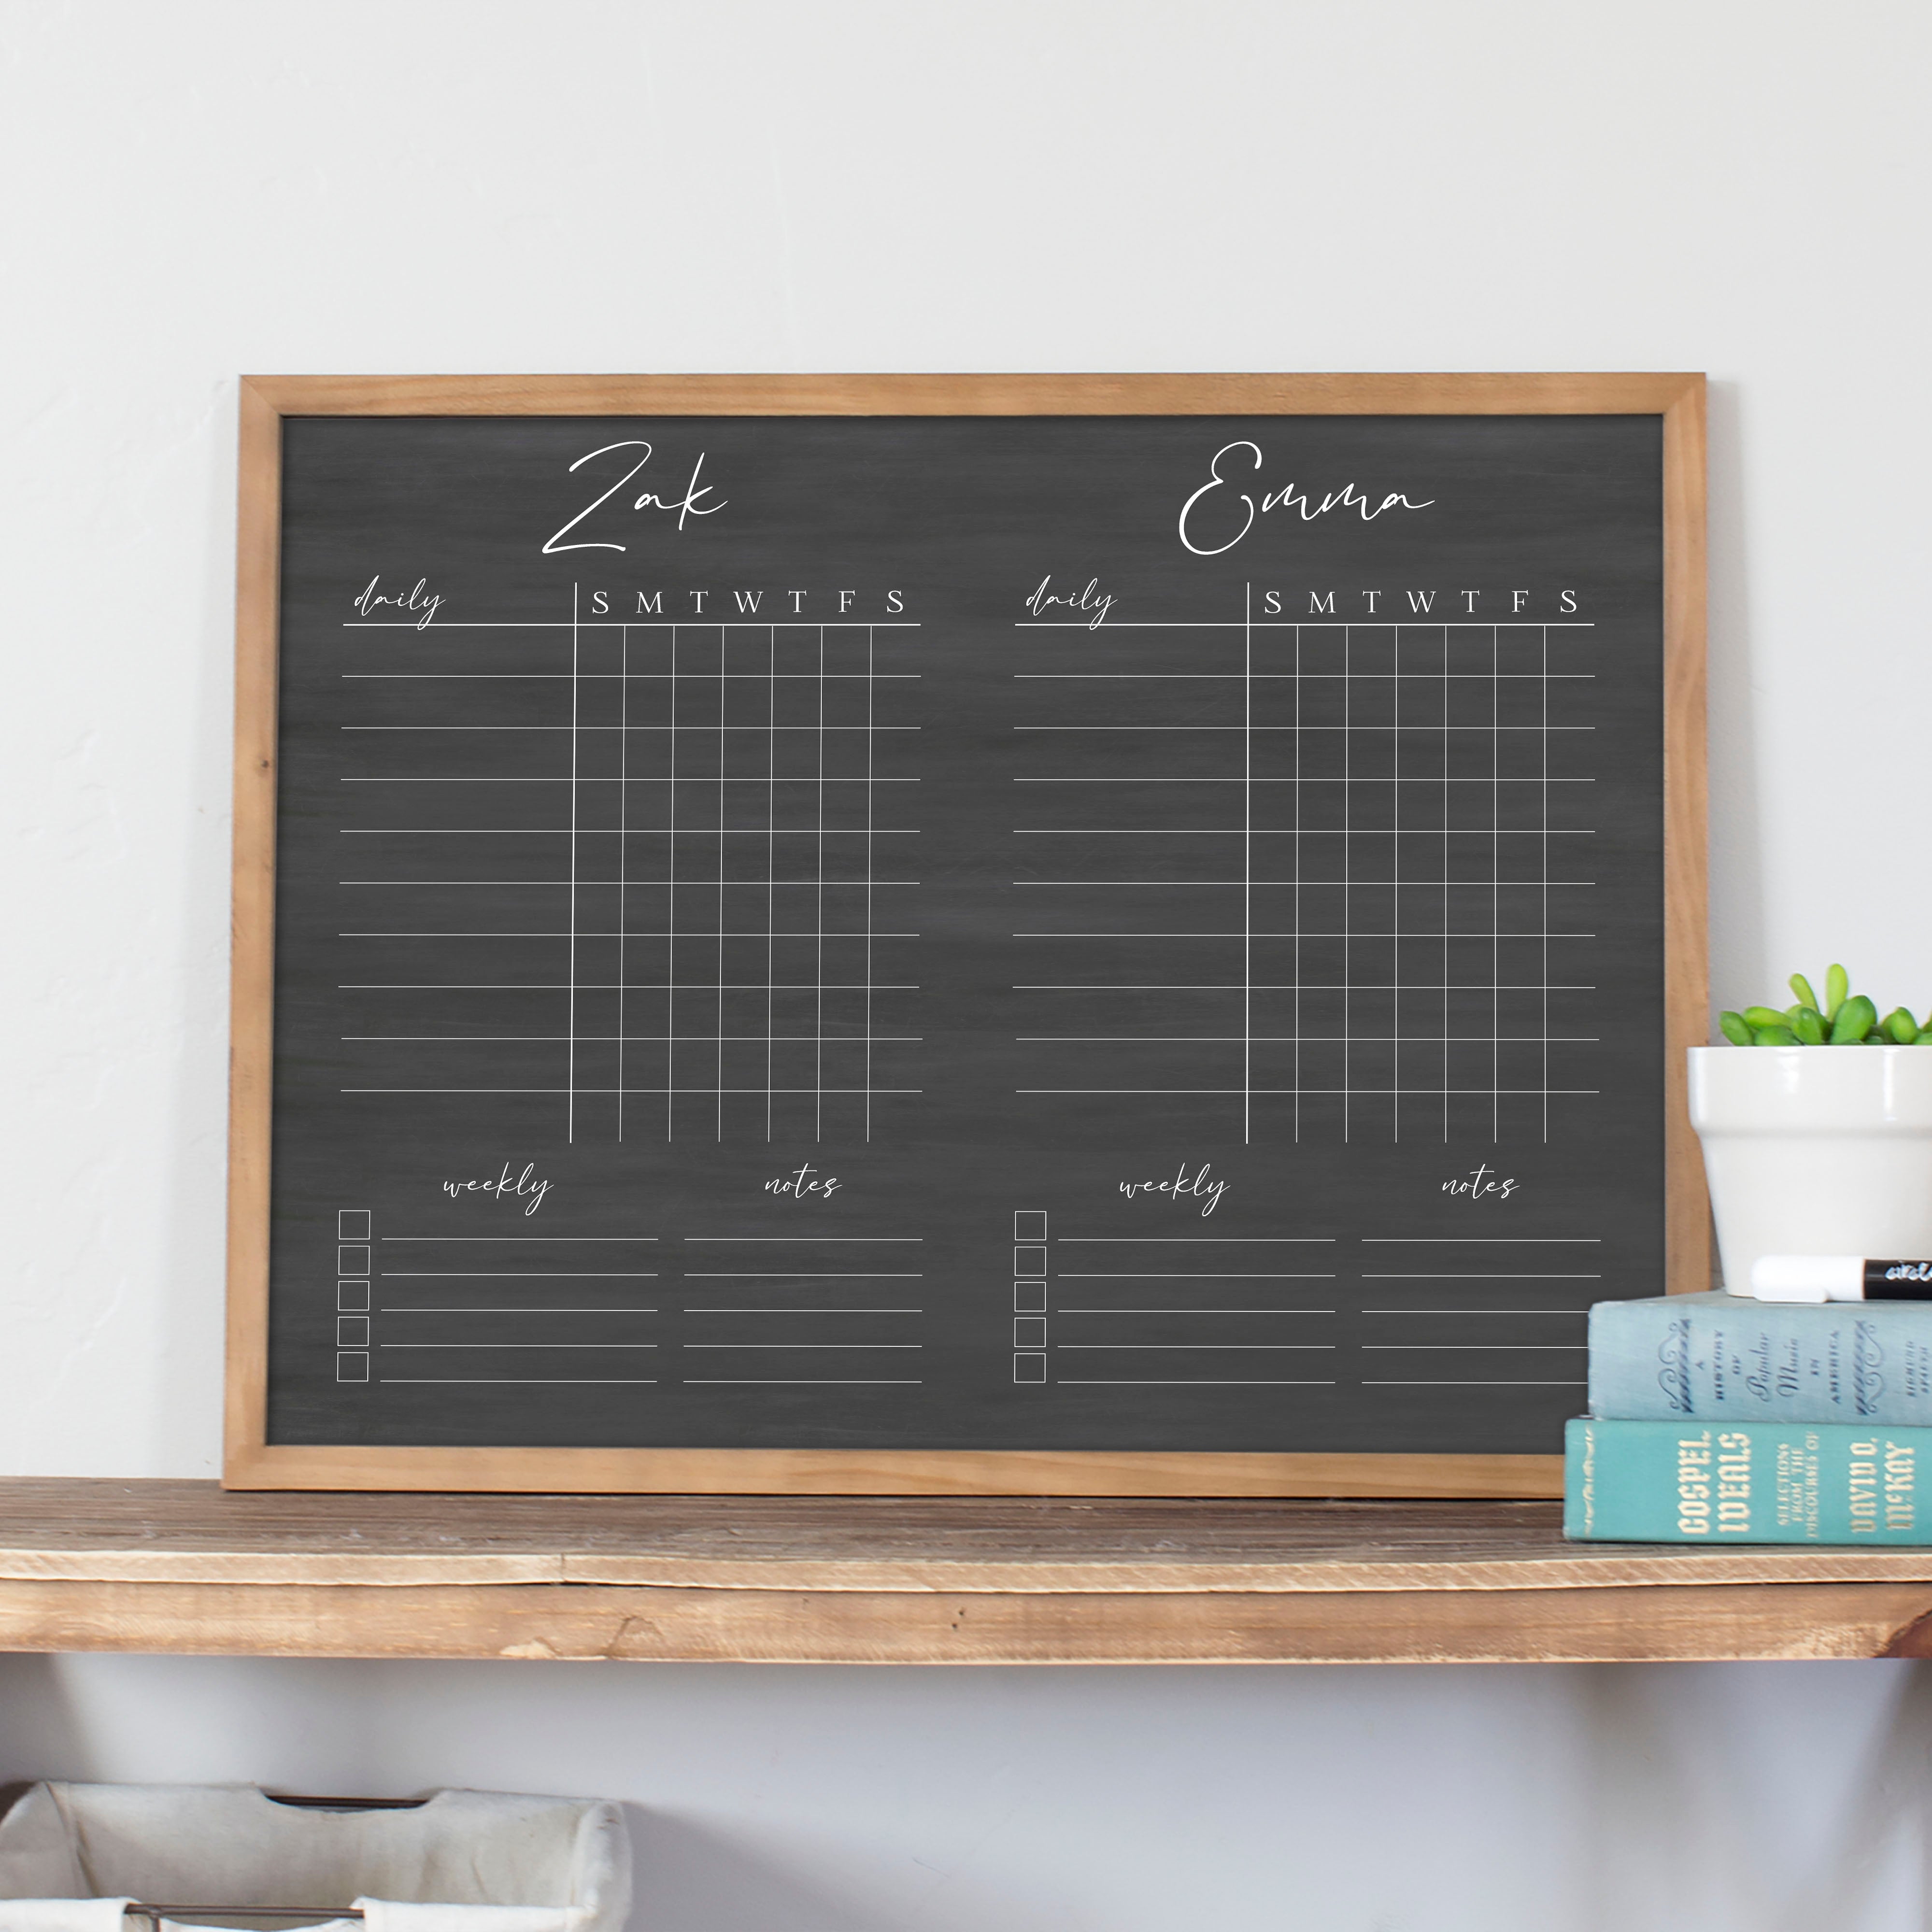 2 Person Framed Chalkboard Chore Chart  | Horizontal Pennington